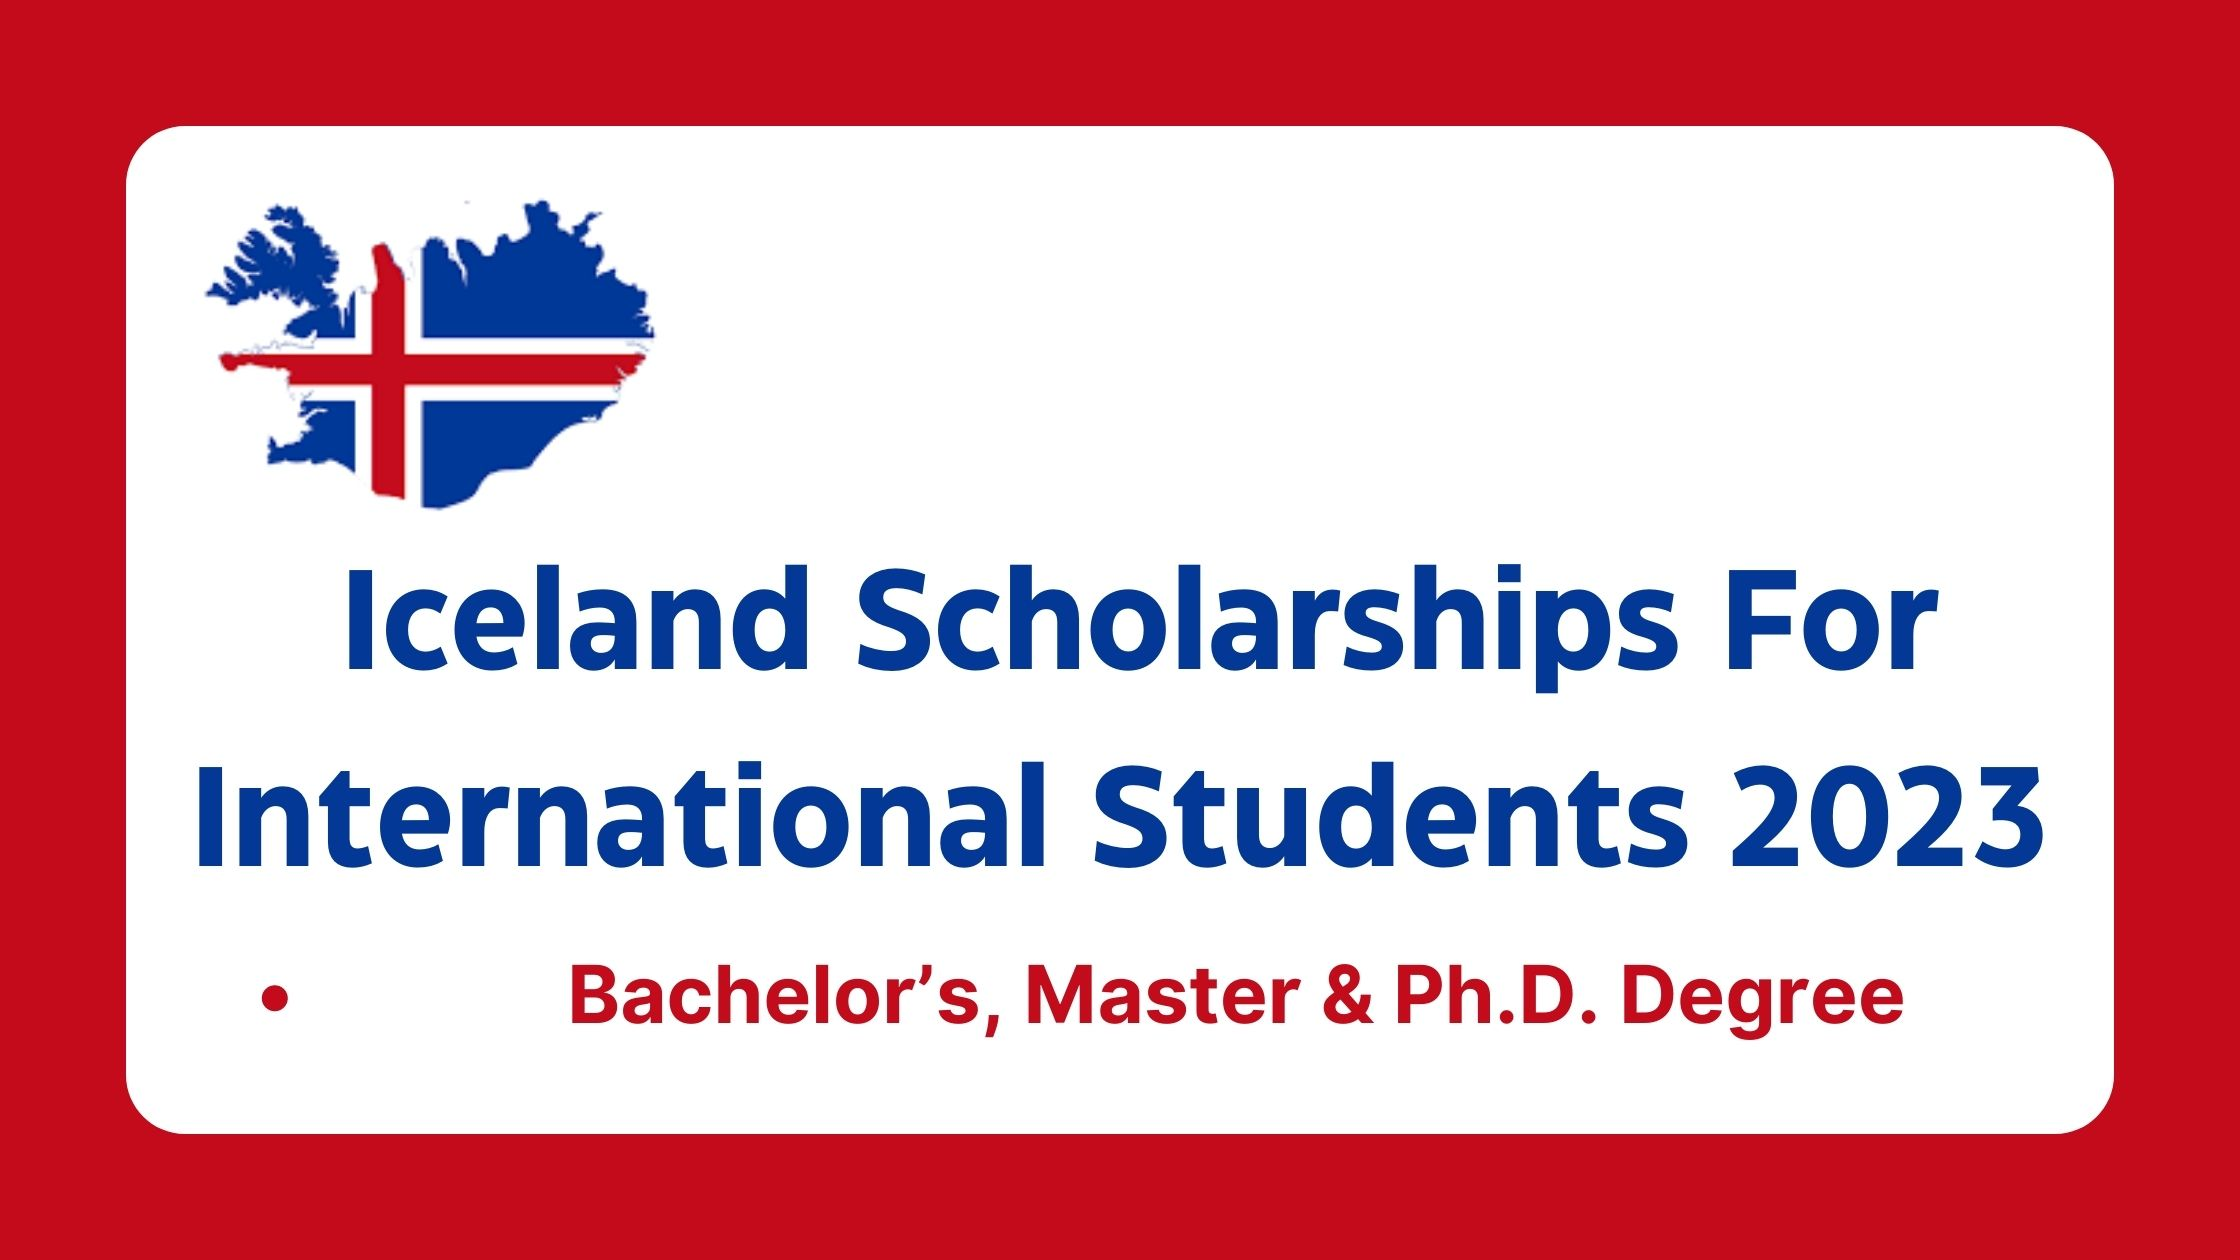 Iceland Scholarships For International Students 2023